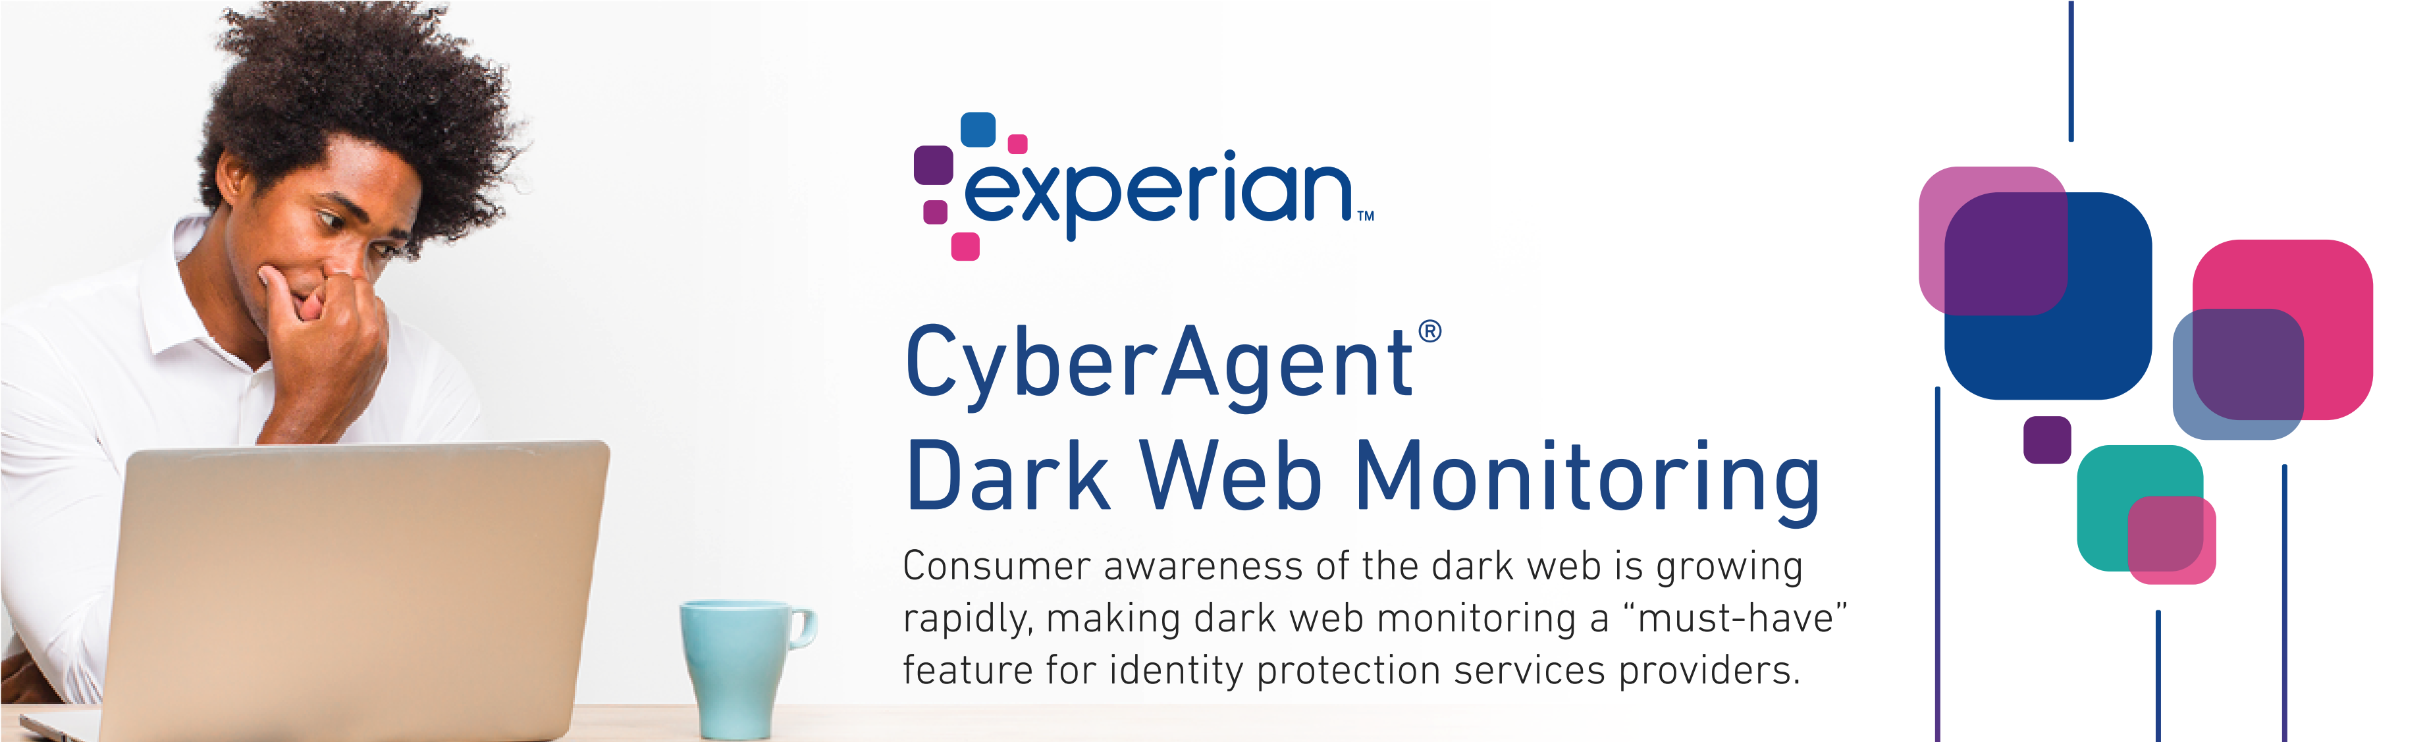 CyberAgent Dark Web Monitoring